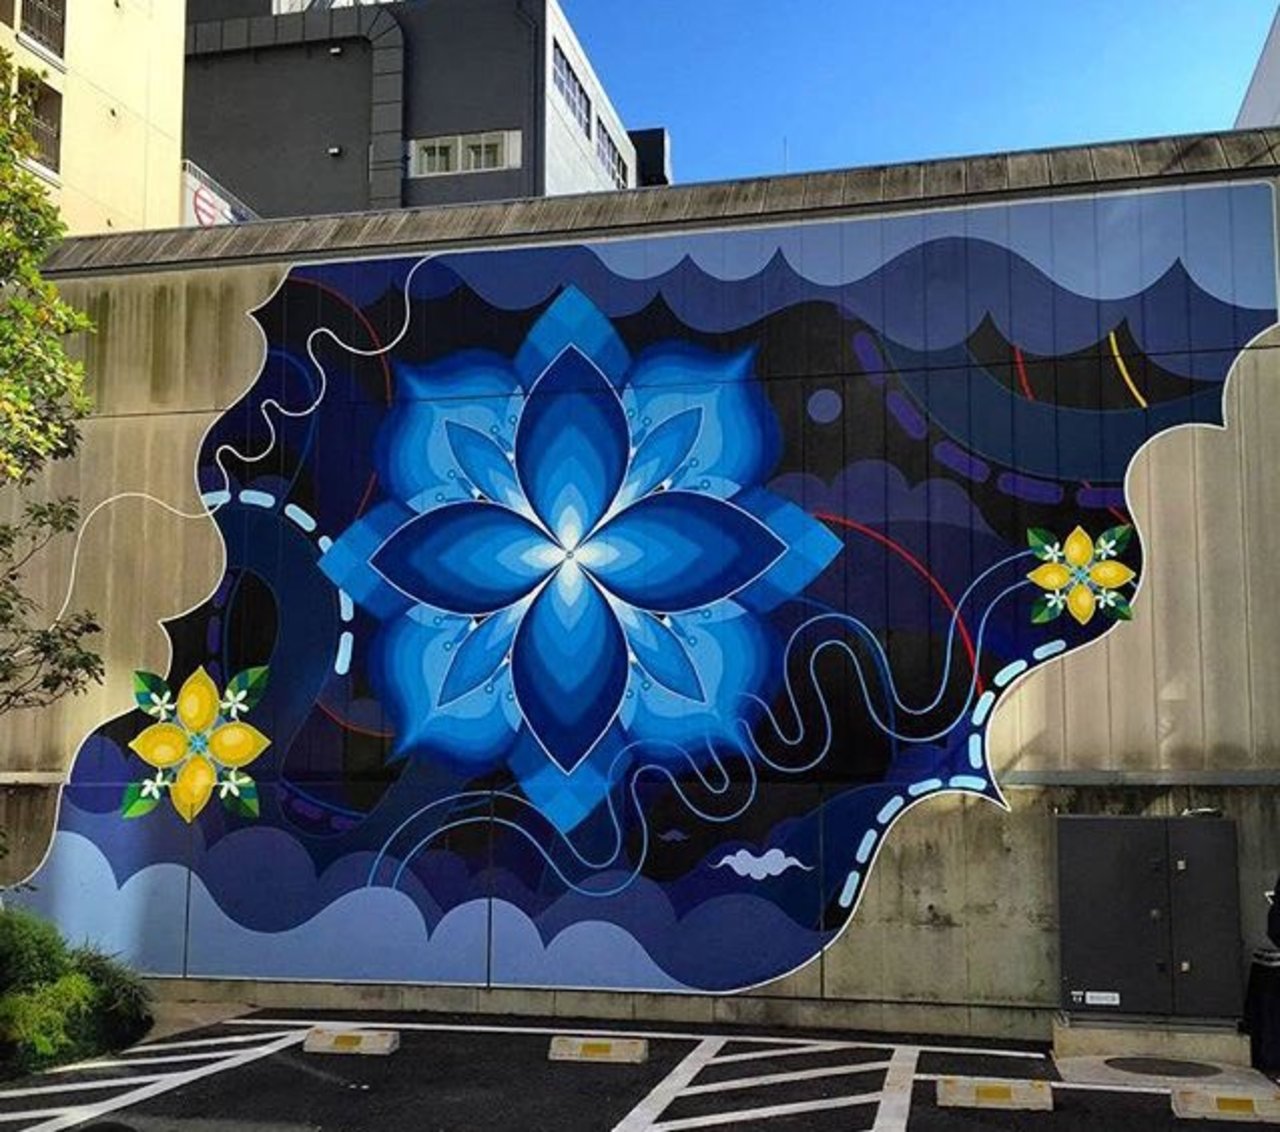 New tumblr post: "New Street Art by htzk, kami_htzk + sasu_lyri 

#art #graffiti #mural #streetart https://t.co/YIQncpk7x4" …